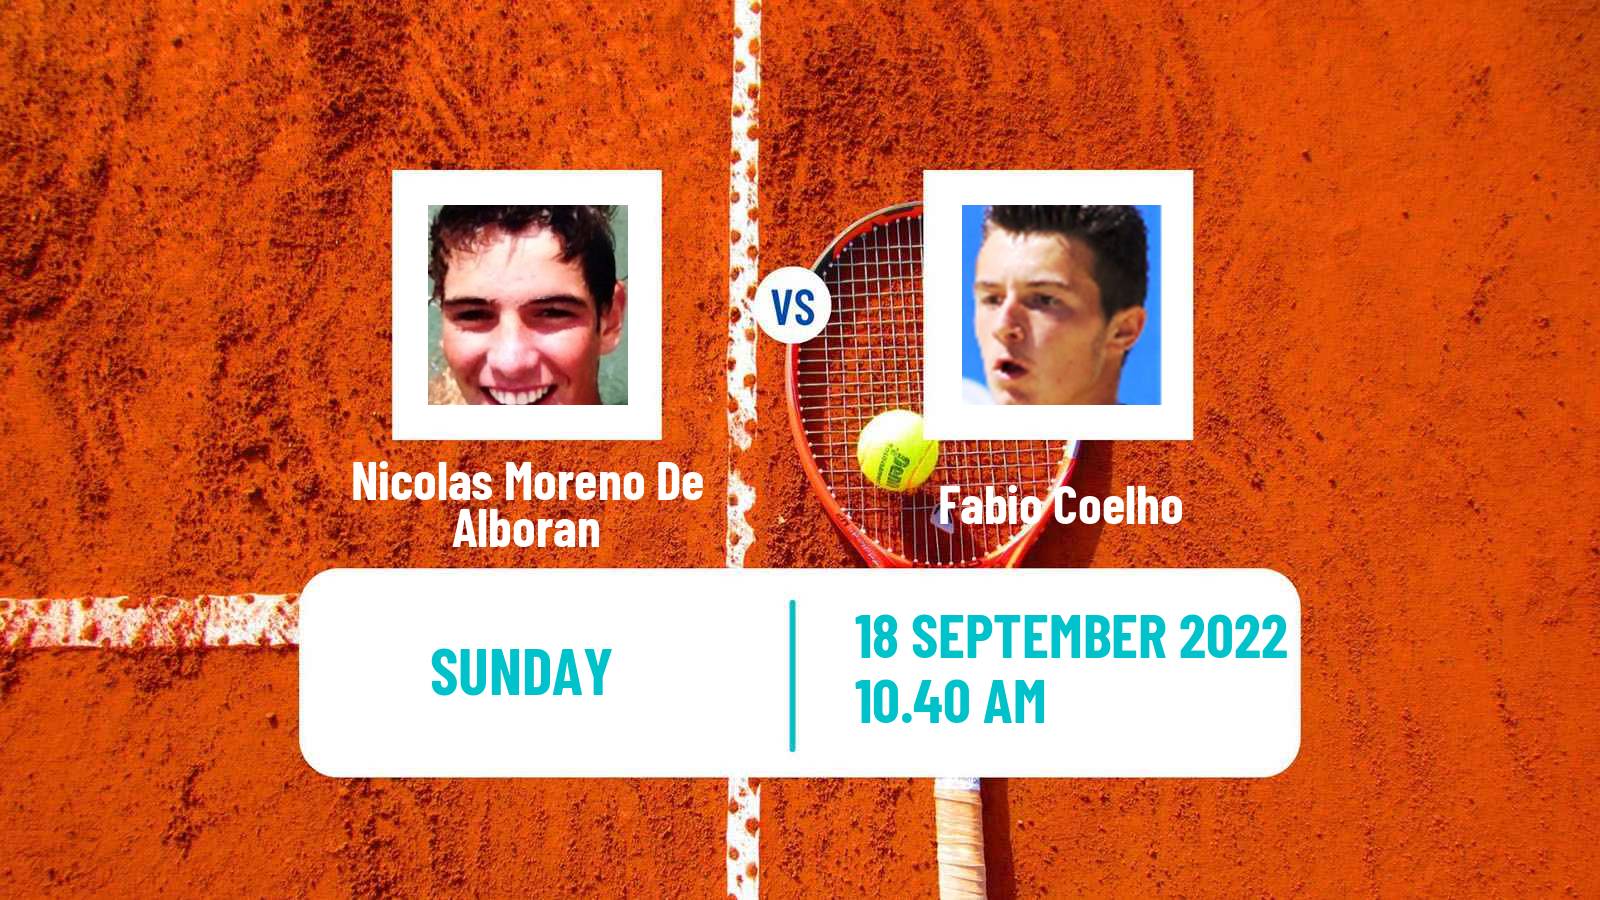 Tennis ATP Challenger Nicolas Moreno De Alboran - Fabio Coelho